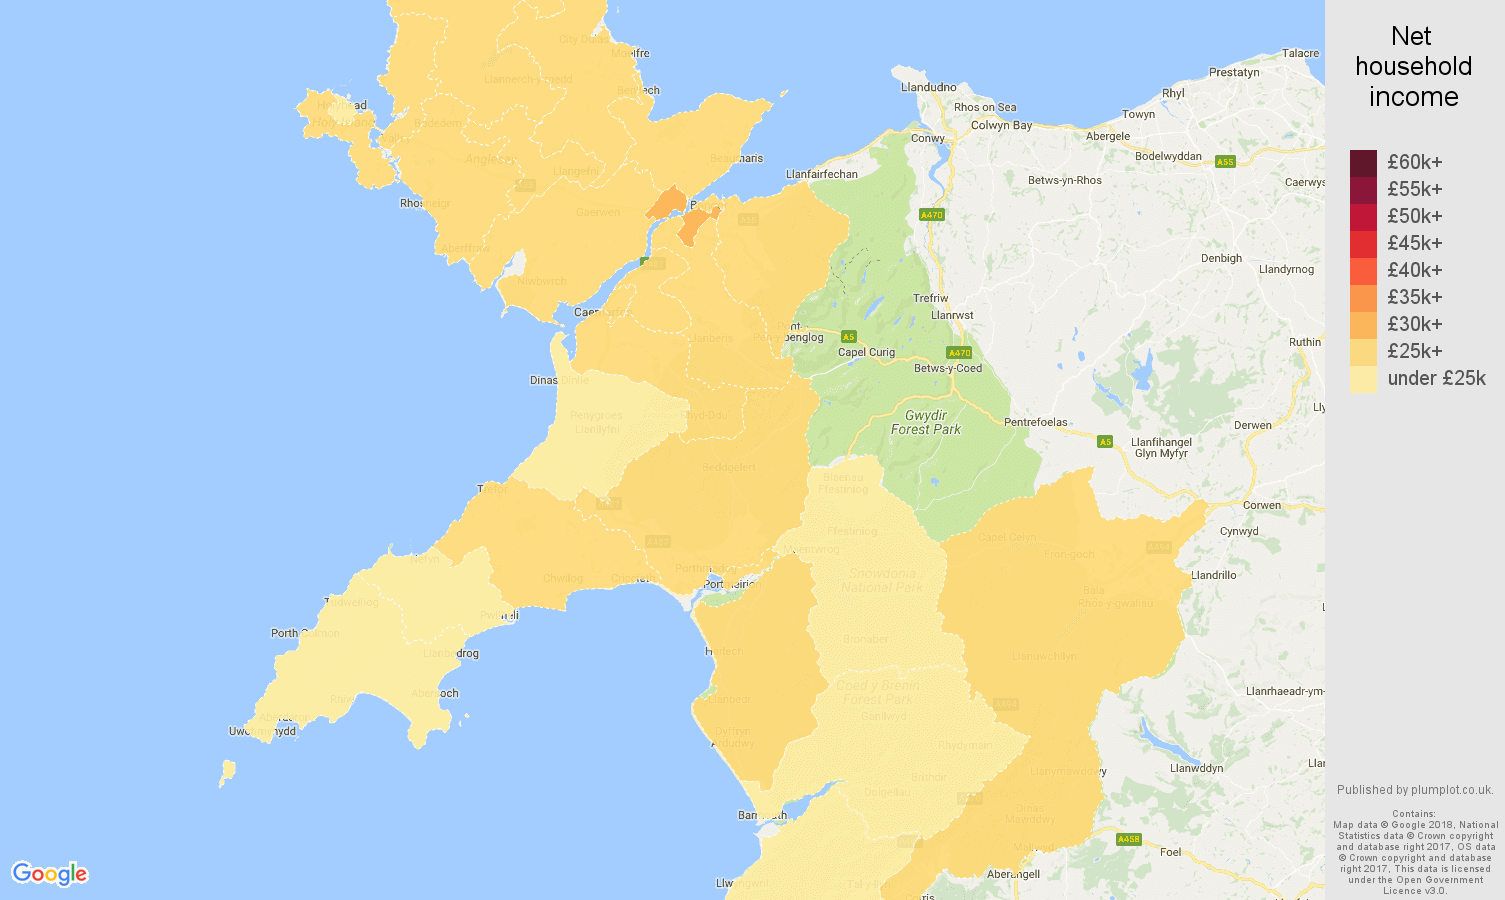 Gwynedd net household income map